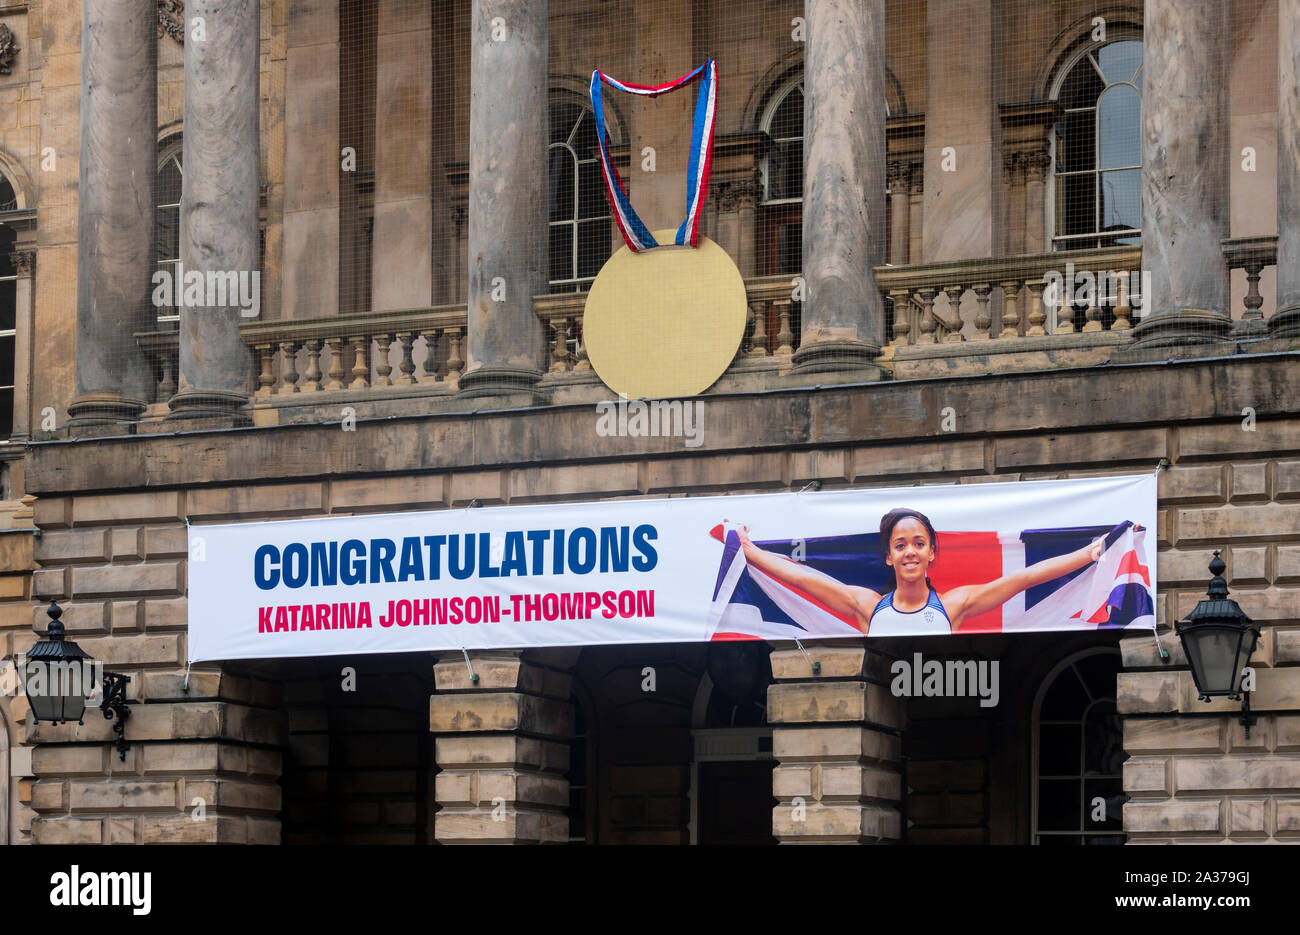 Banner congratulating Katarina Johnson-Thompson over the entrance to Liverpool Town Hall Stock Photo